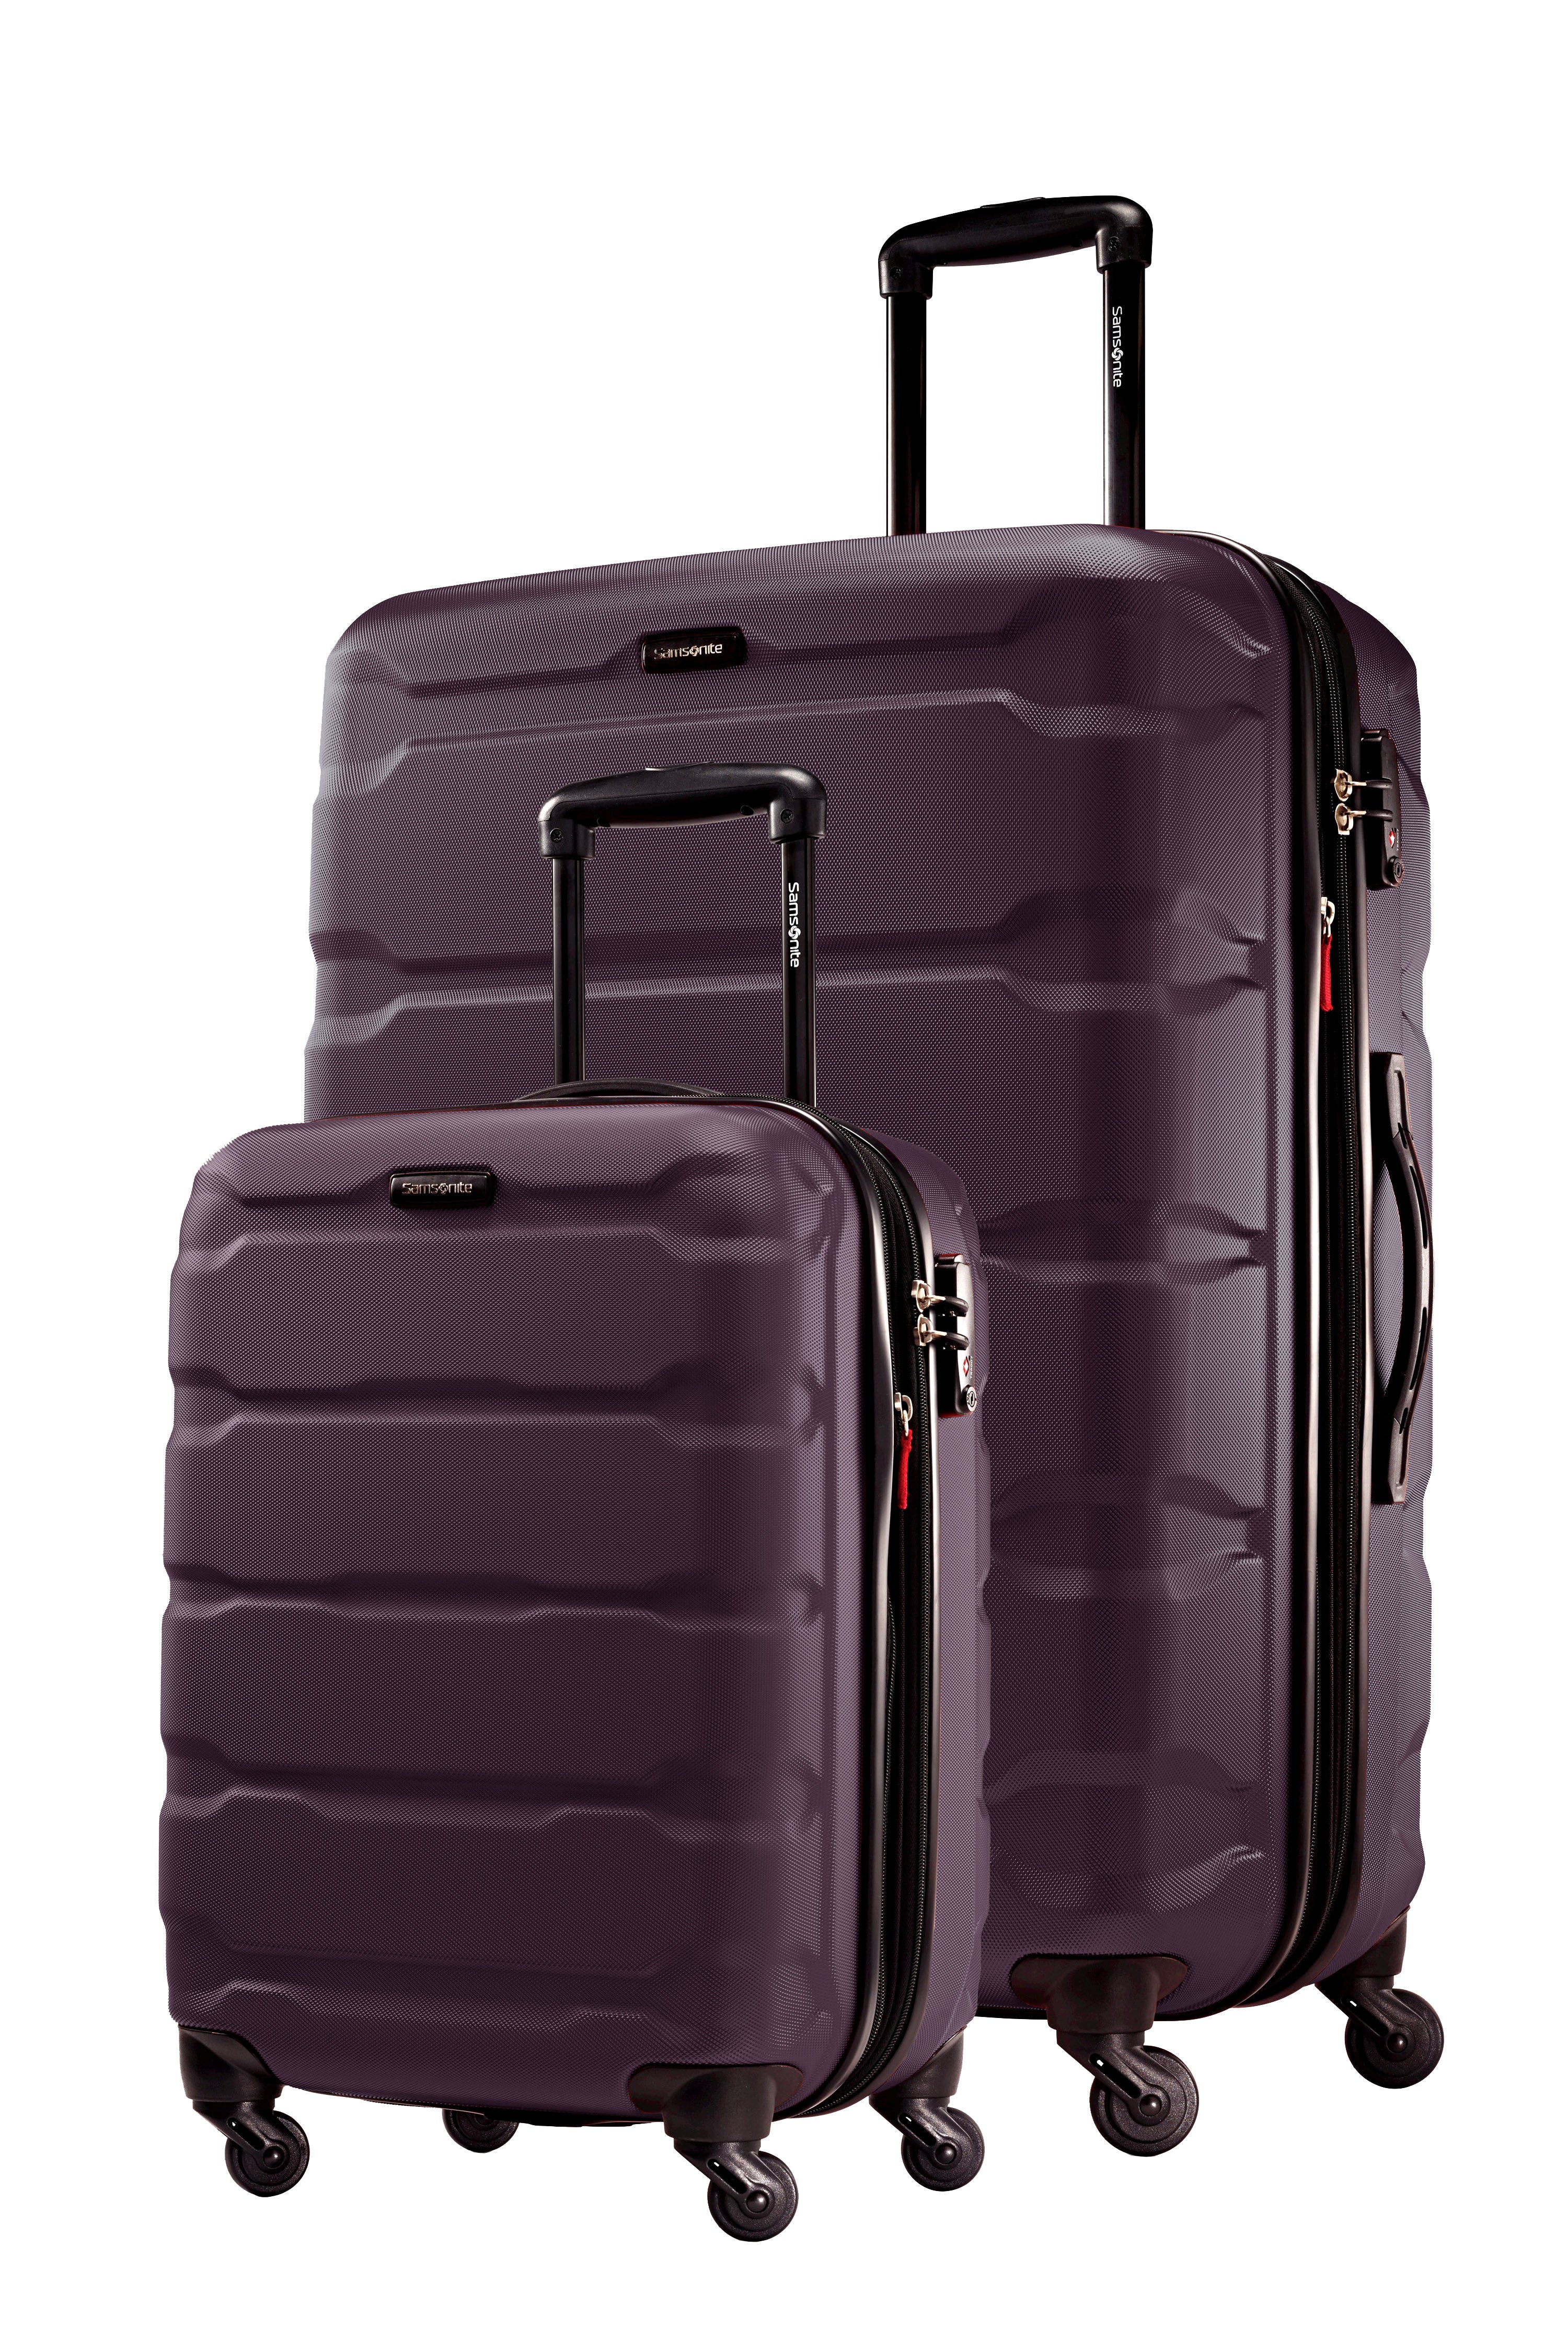 Samsonite Omni Hardside Luggage Nested Spinner Set (20/24/28) Teal ...